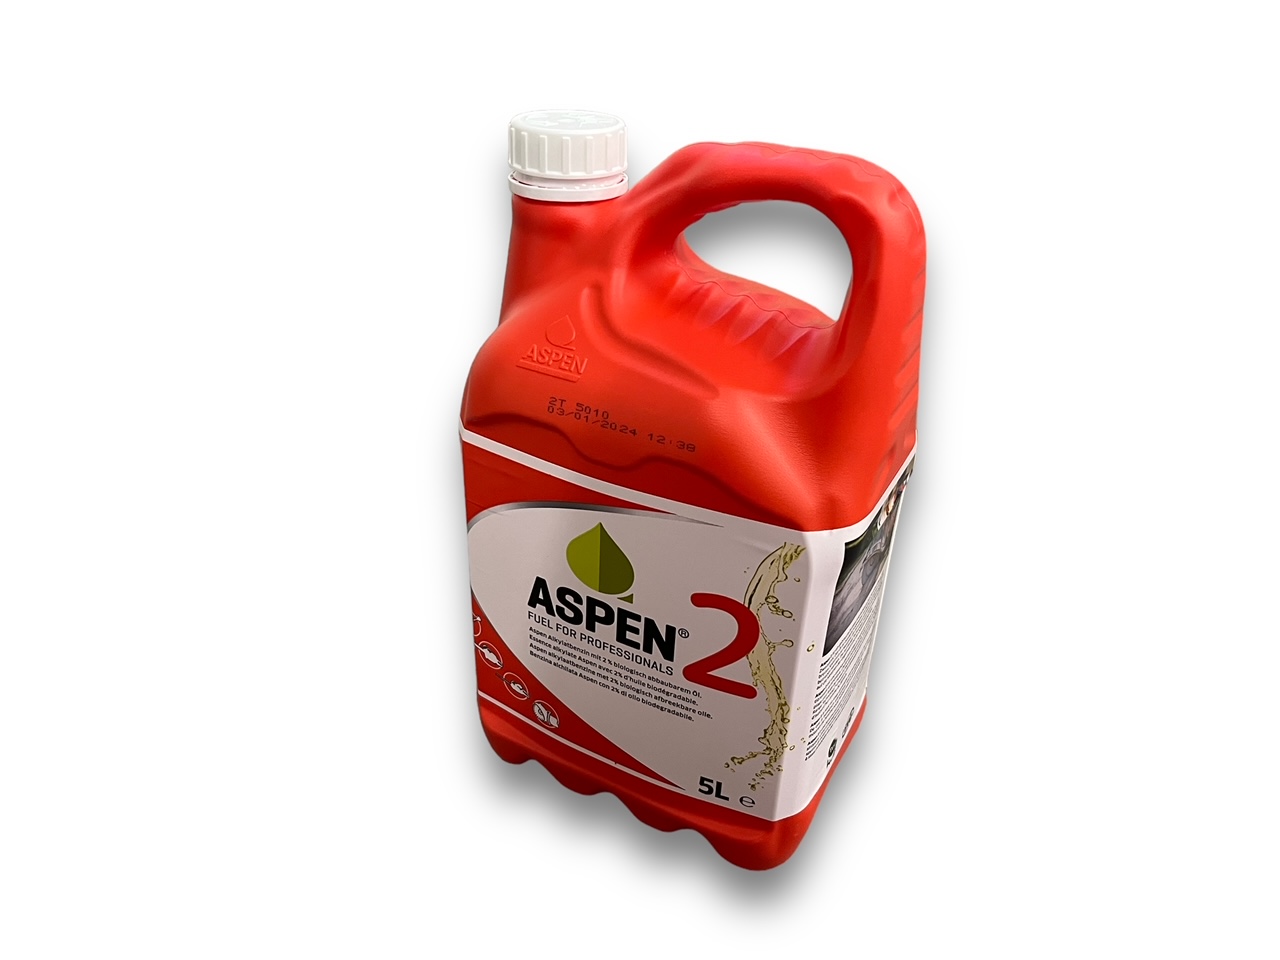 Aspen 2